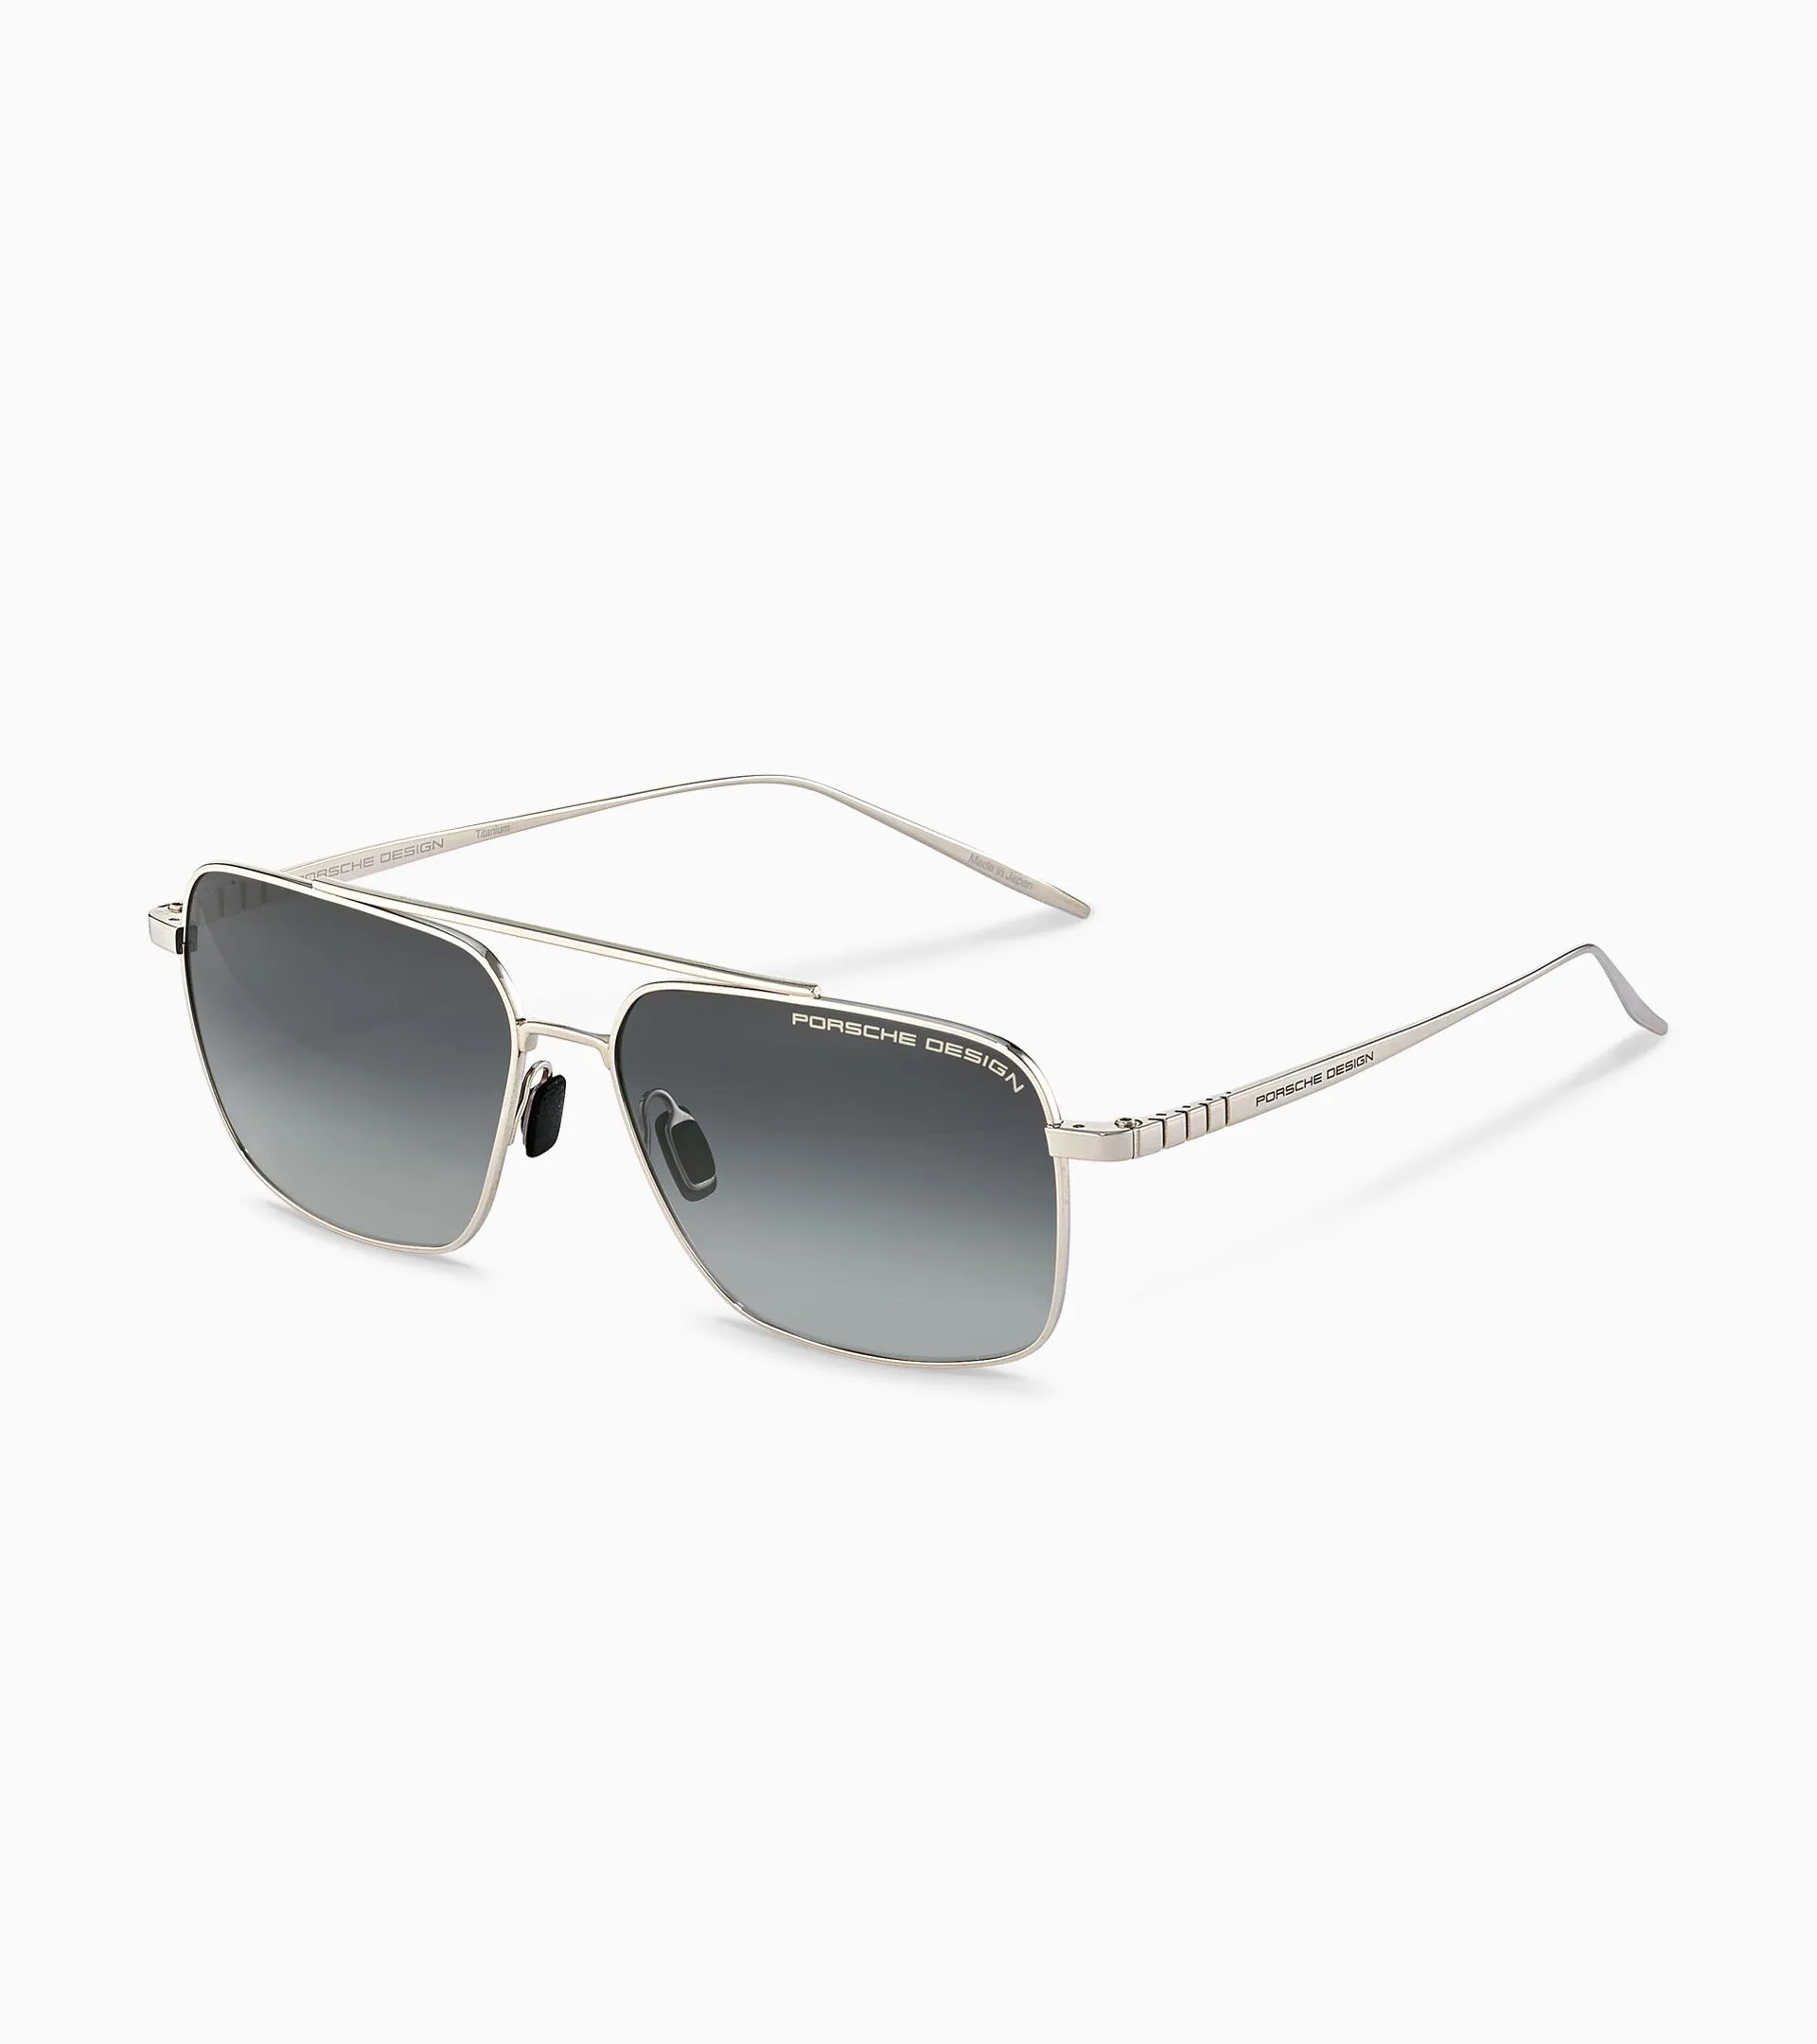 Porsche Design Sunglasses P 8613 C, two lenses rare titanium frames | eBay